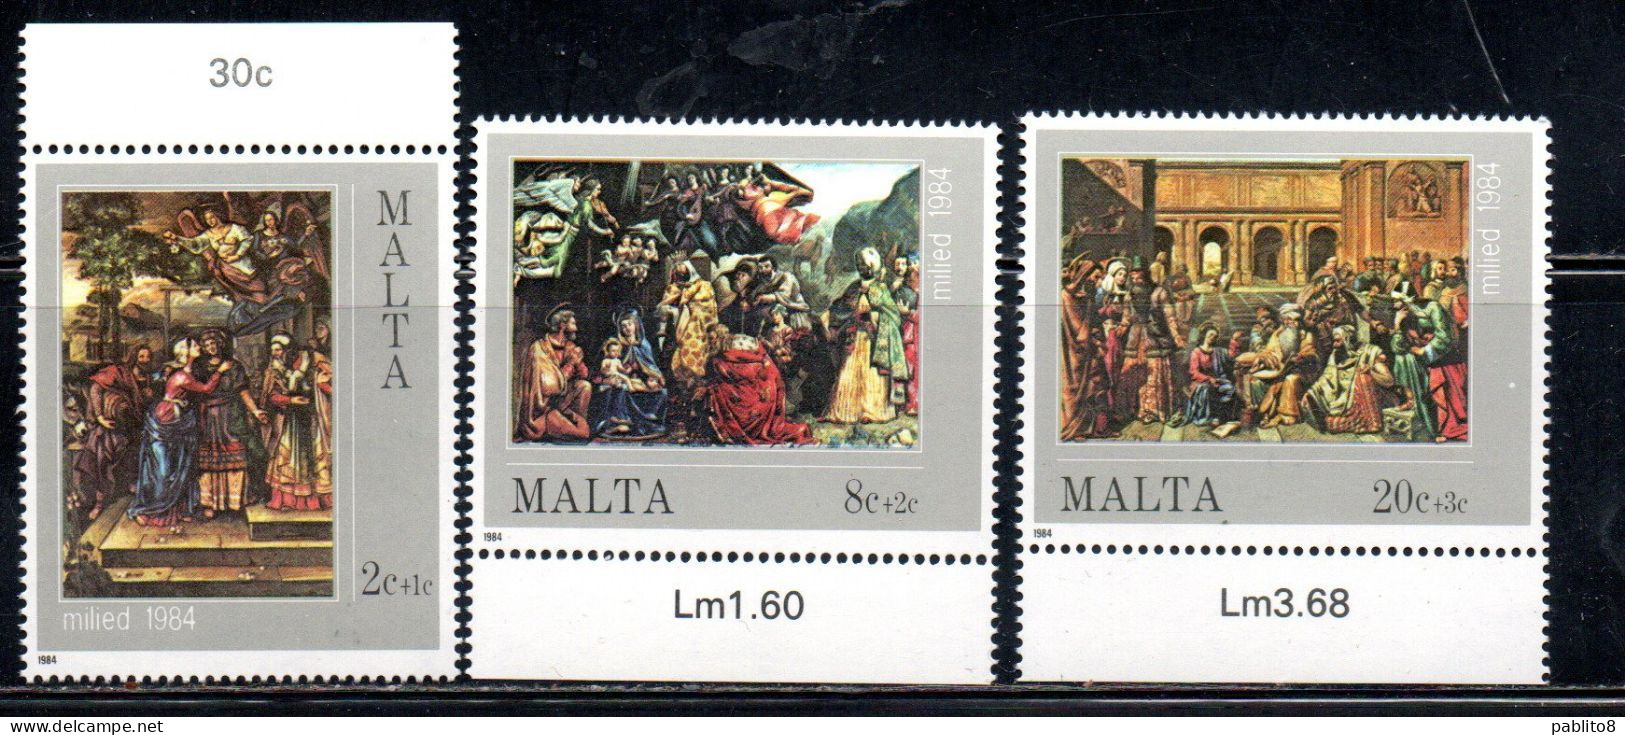 MALTA 1984 CHRISTMAS NATALE NOEL WEIHNACHTEN NAVIDAD NATAL COMPLETE SET SERIE COMPLETA MNH - Malta